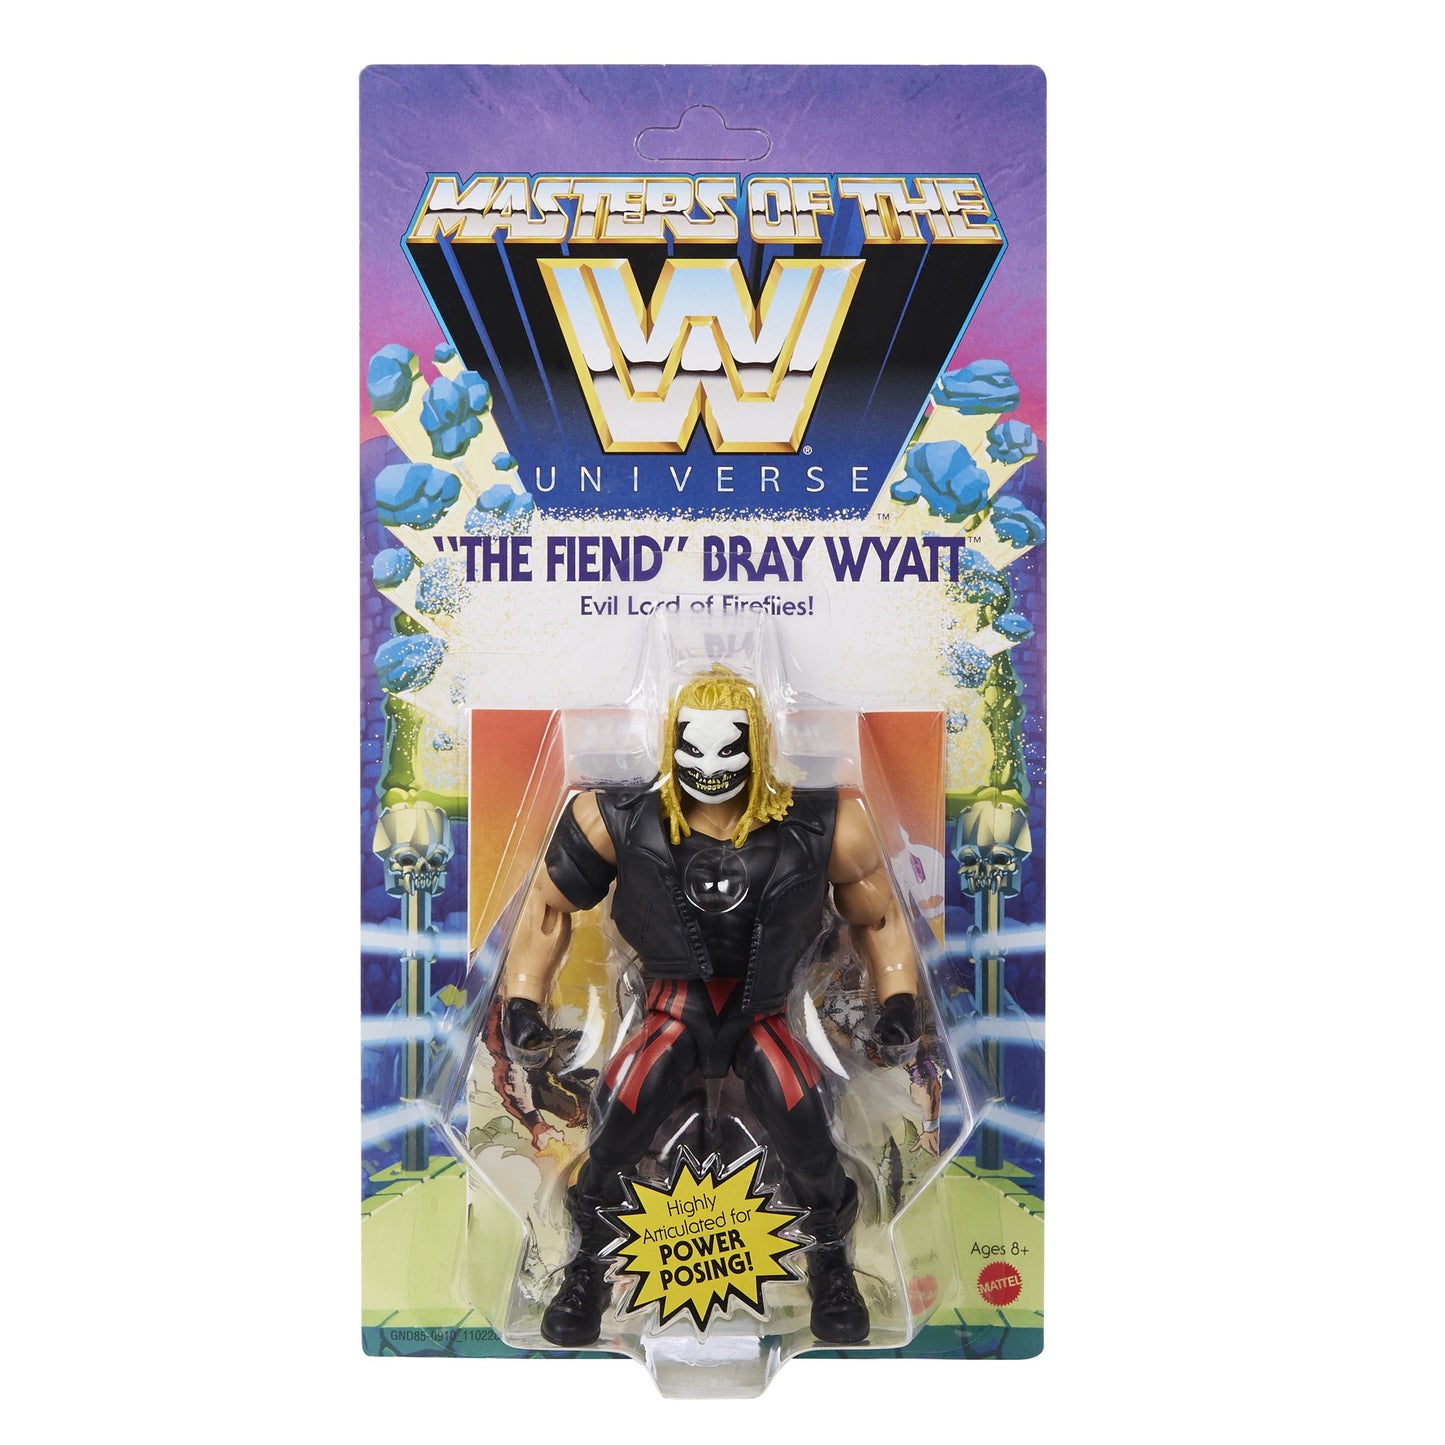 WWE Mattel Masters of the WWE Universe 4 "The Fiend" Bray Wyatt [Exclusive]